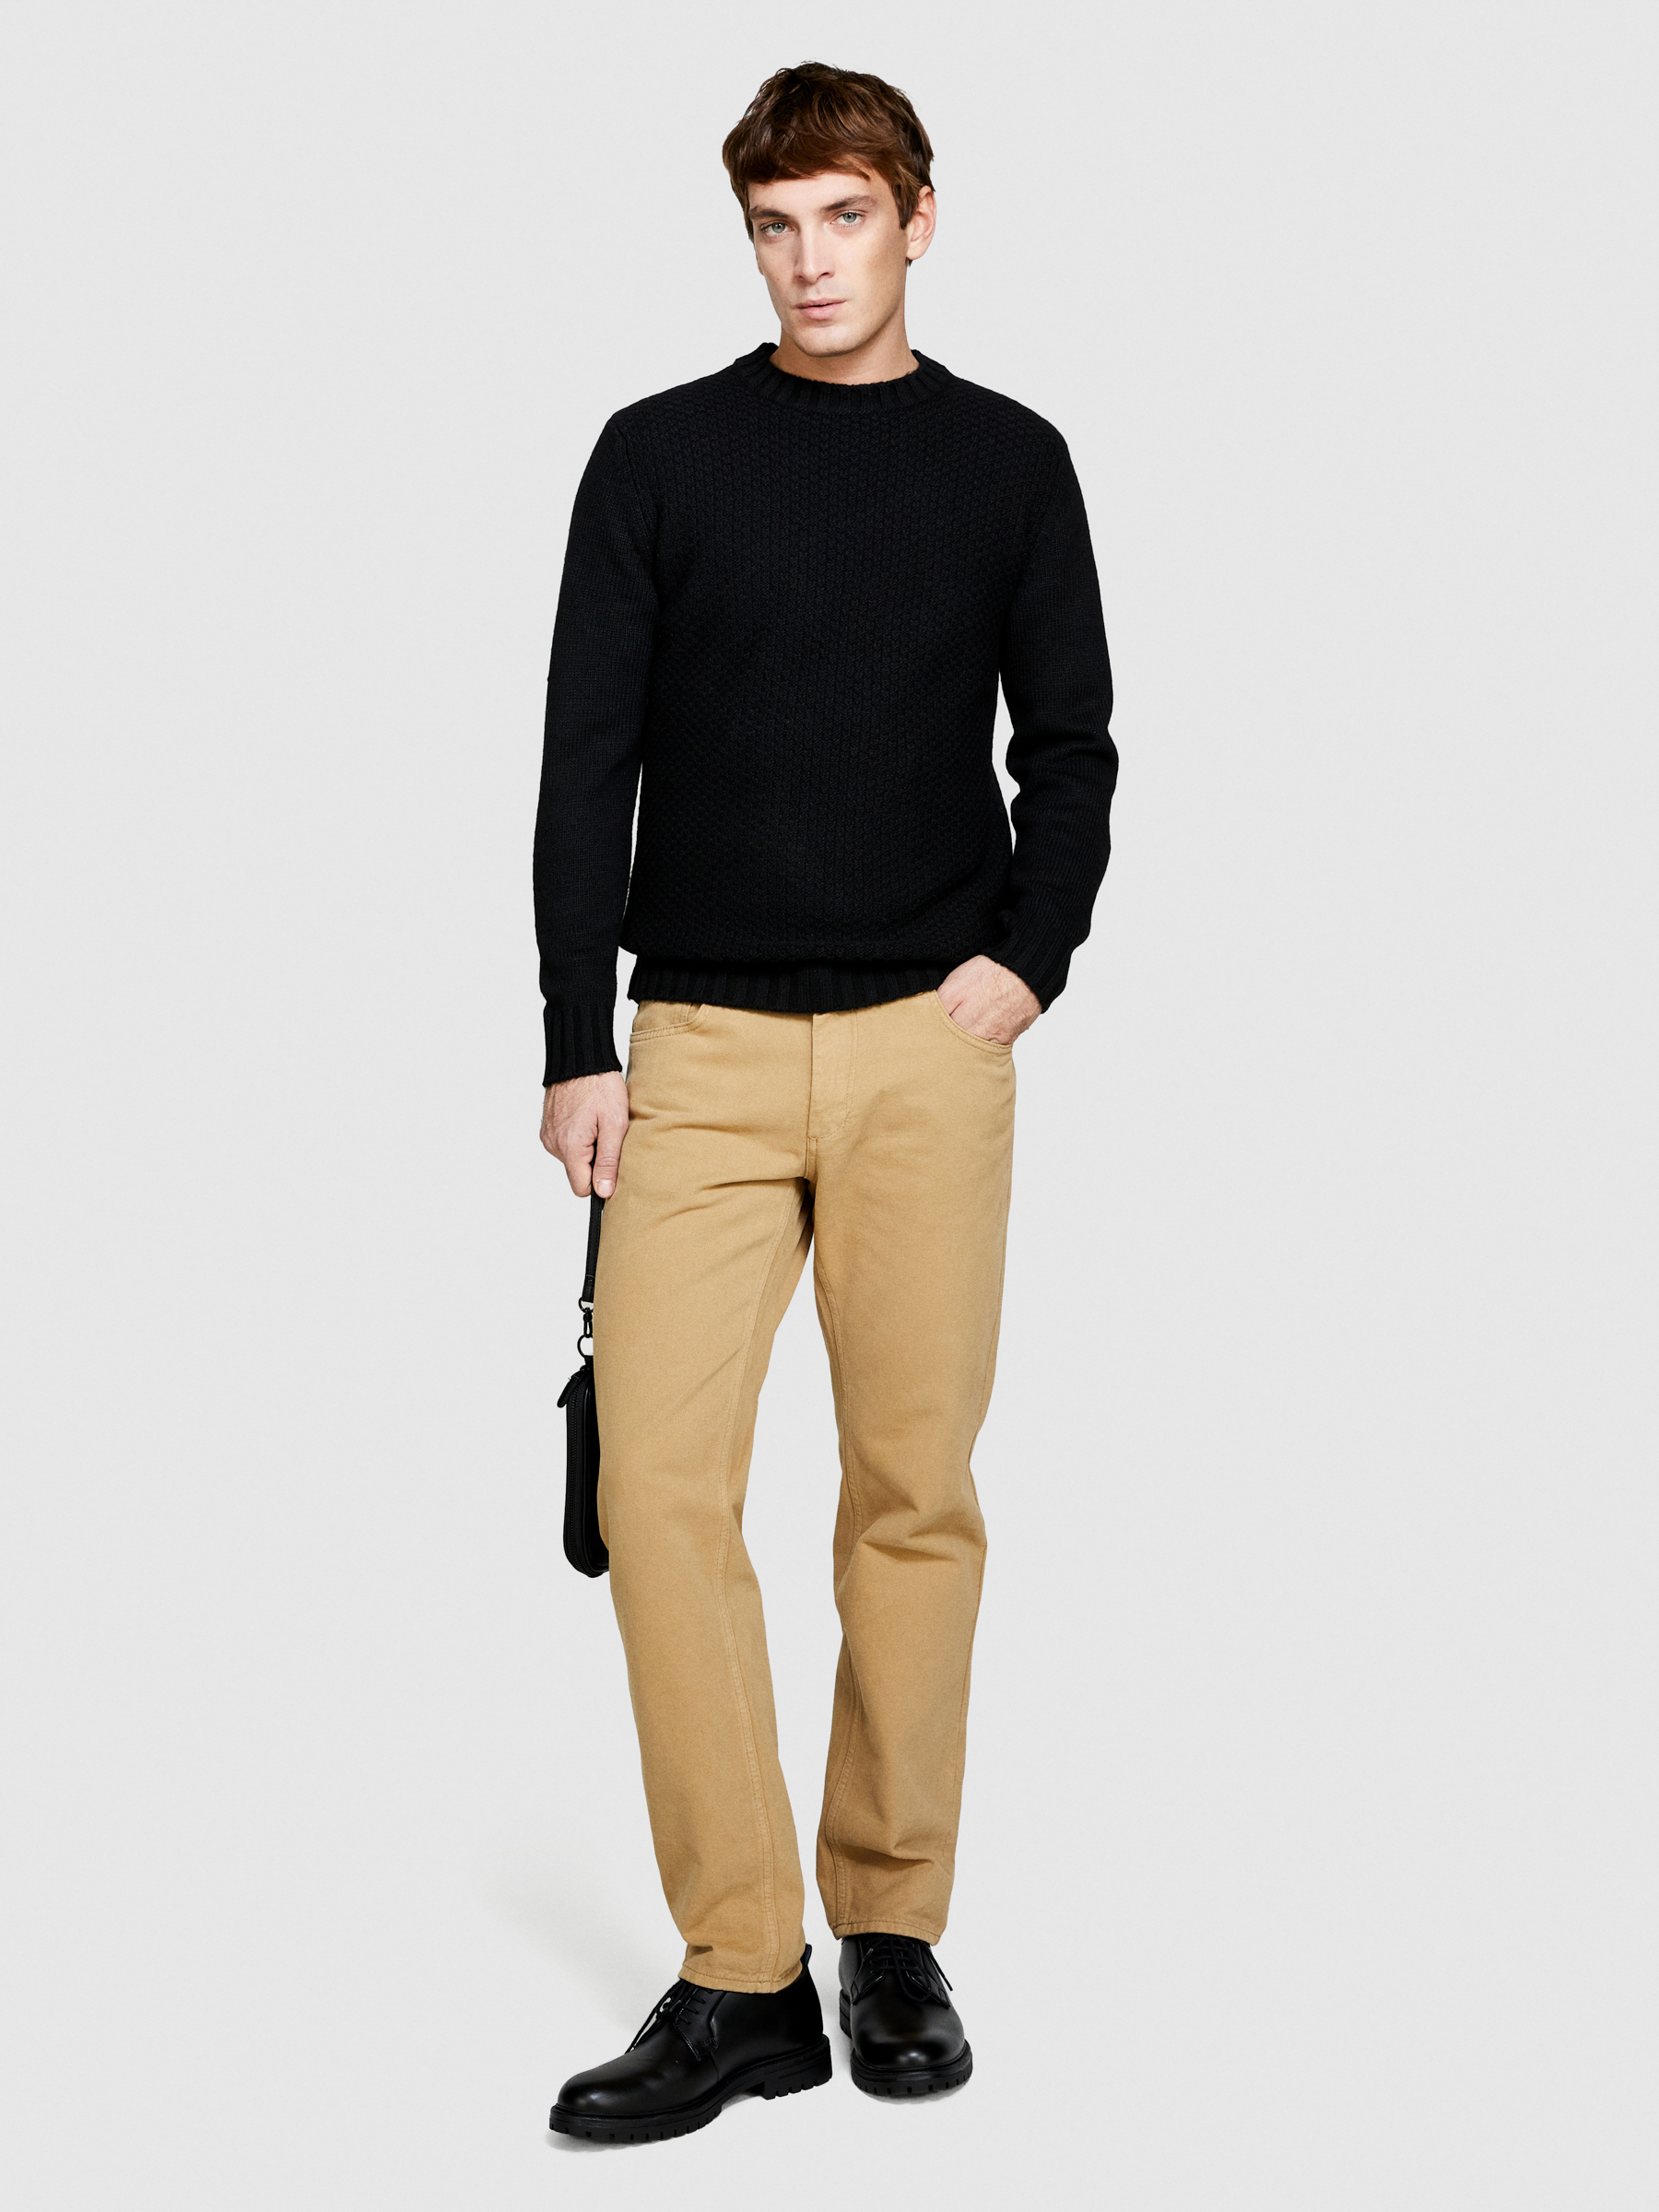 Sisley - Knit Sweater, Man, Black, Size: M